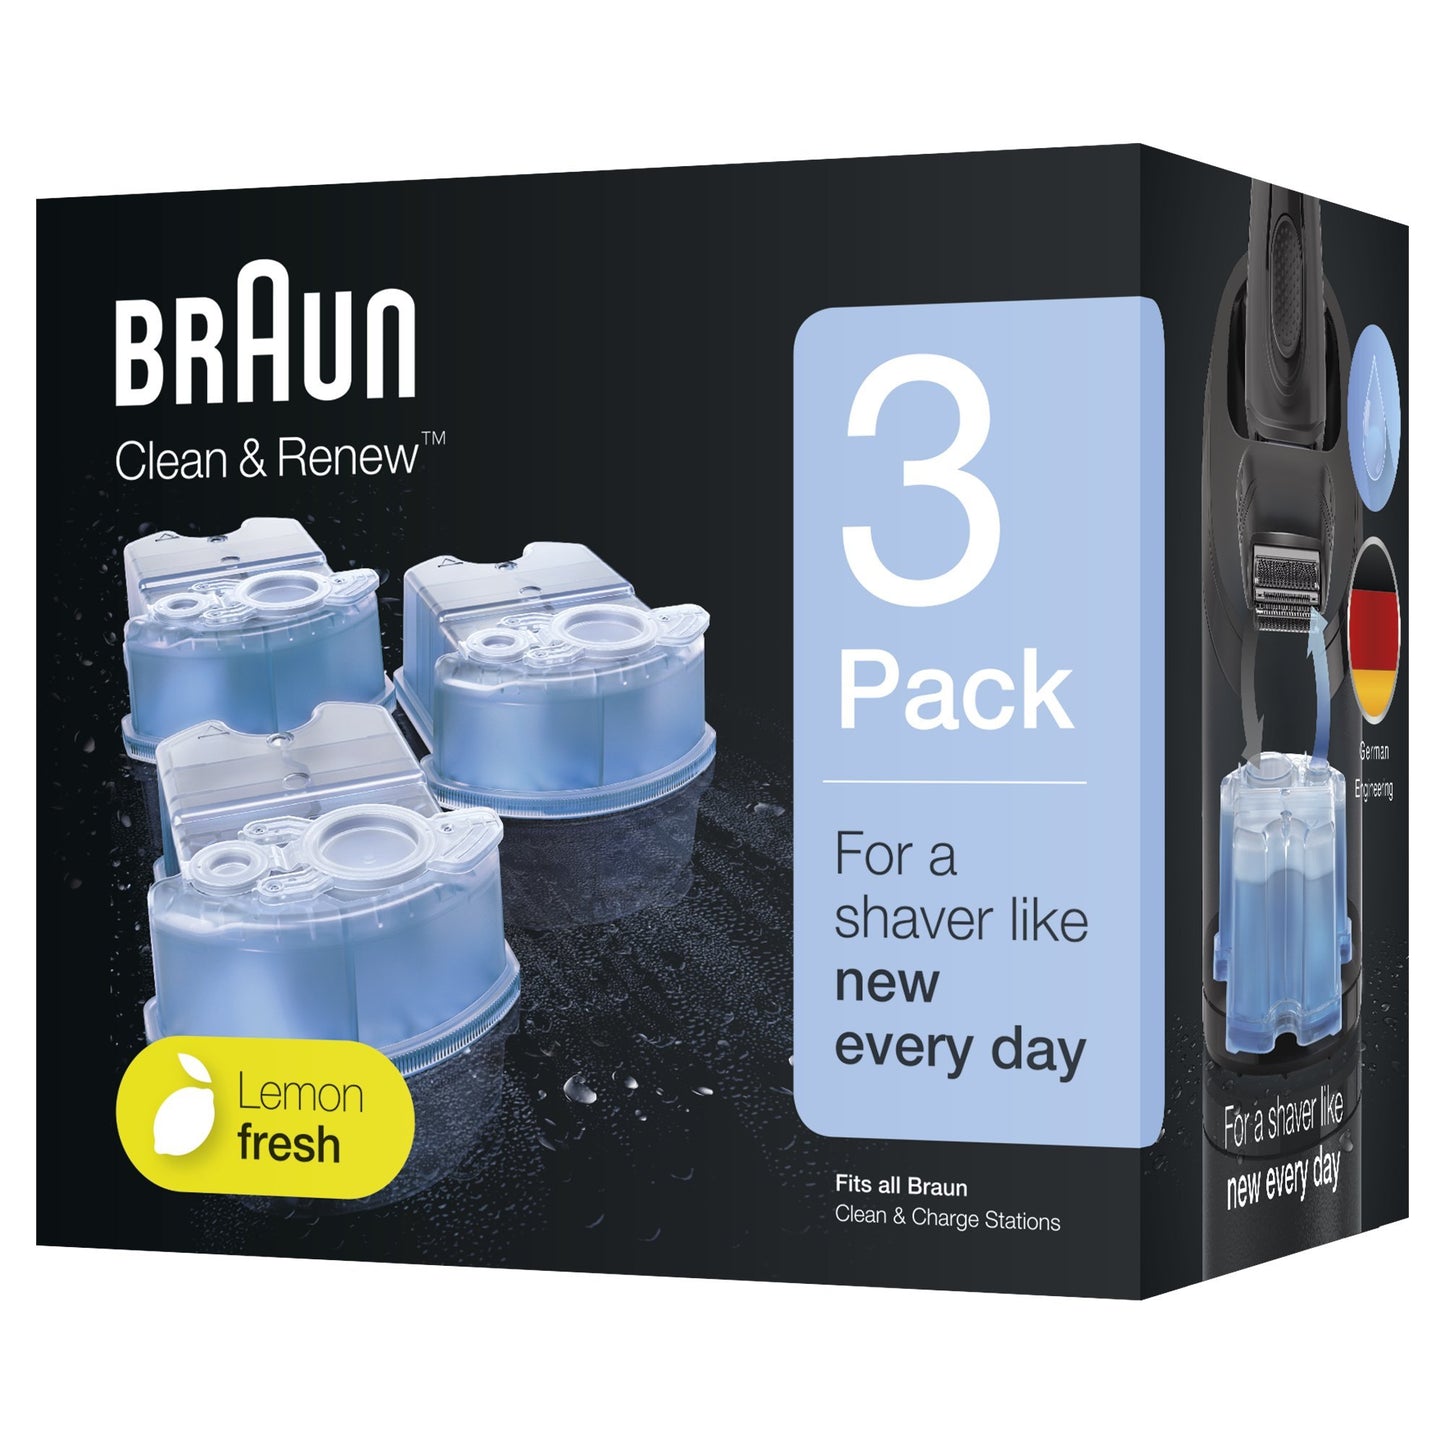 Braun Clean Renew Refill Cartridges CCR , Blue, 3 Count